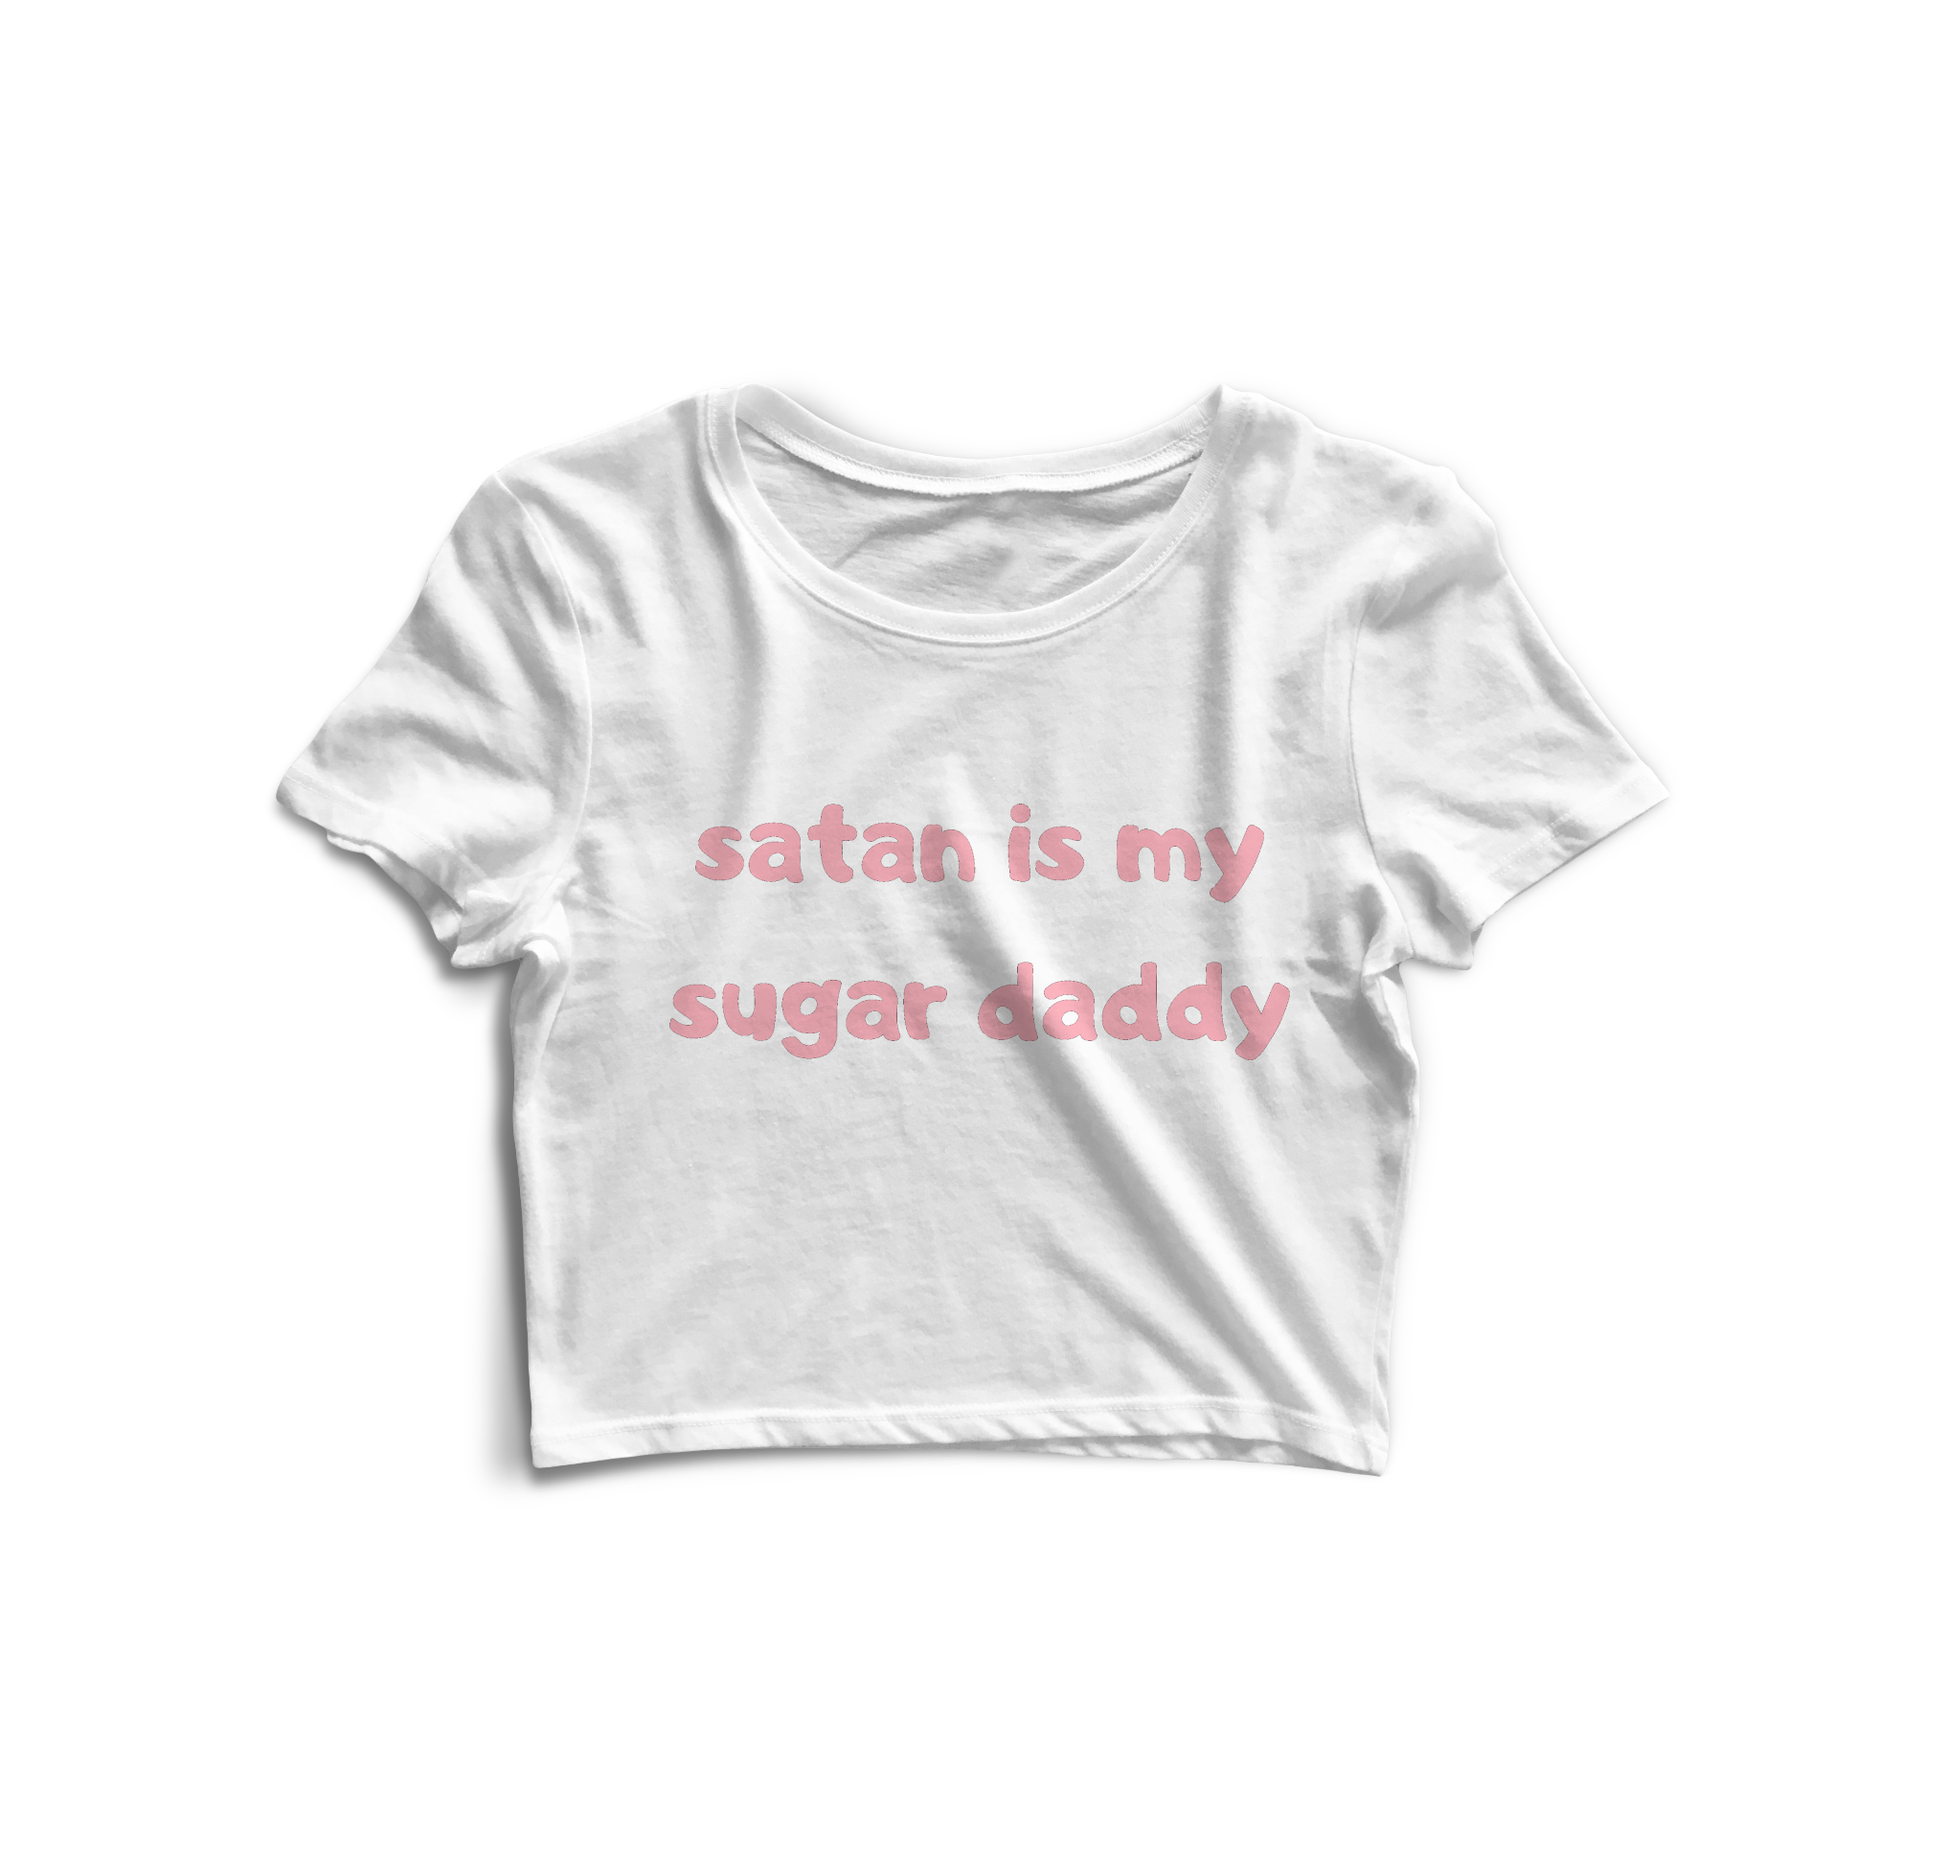 satan is my sugar daddy crop top - white